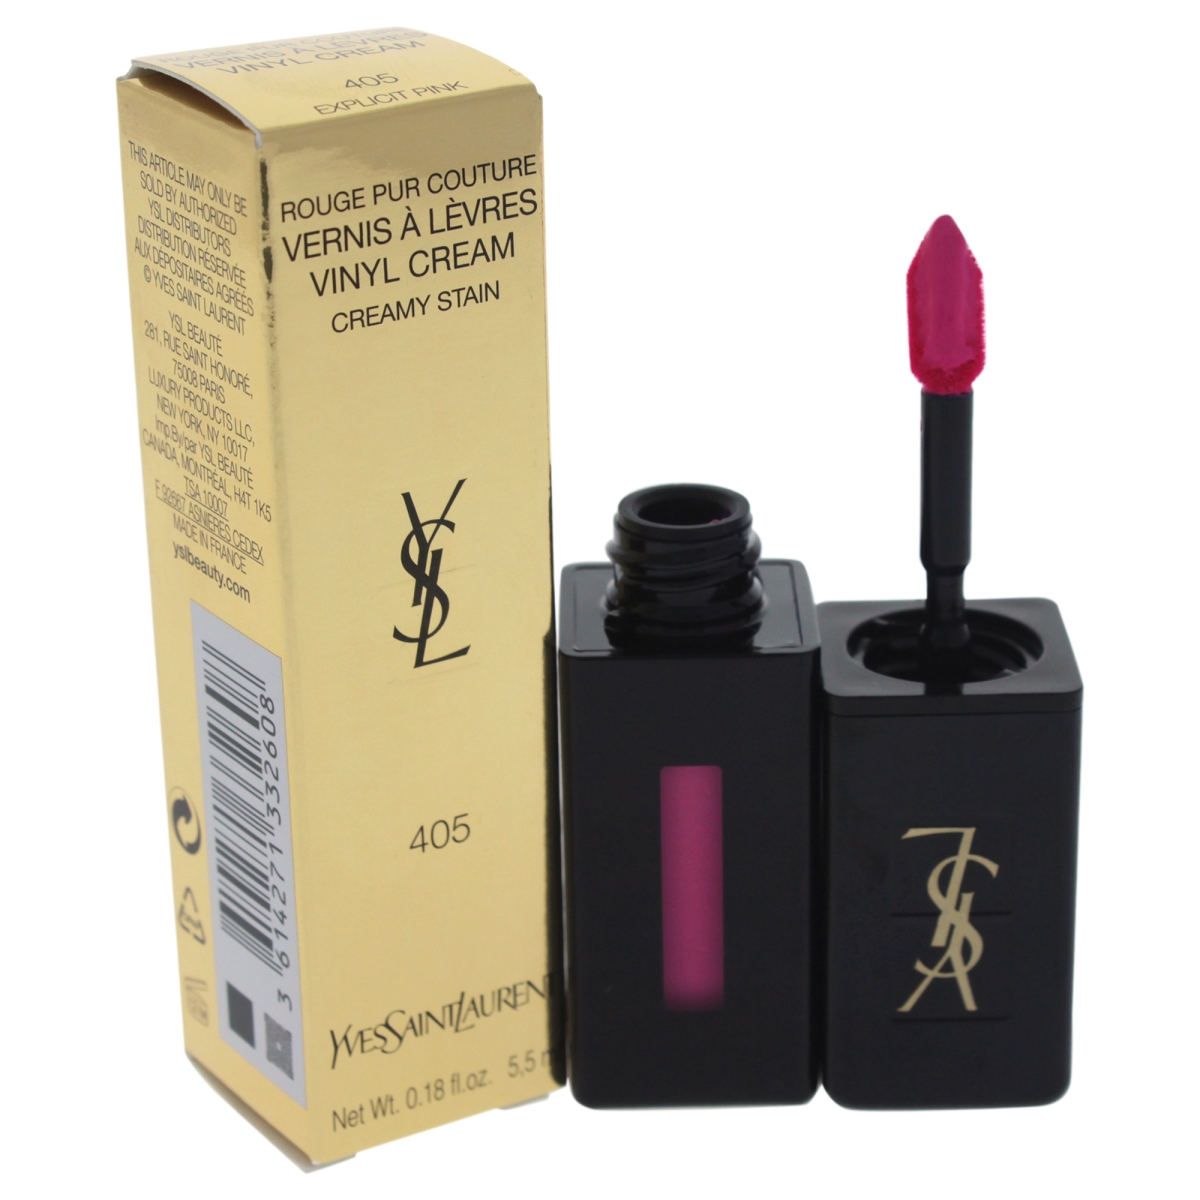 W-c-11428 0.18 Oz No. 405 Vernis Levres Vinyl Cream Lip Gloss - Explicit Pink For Women